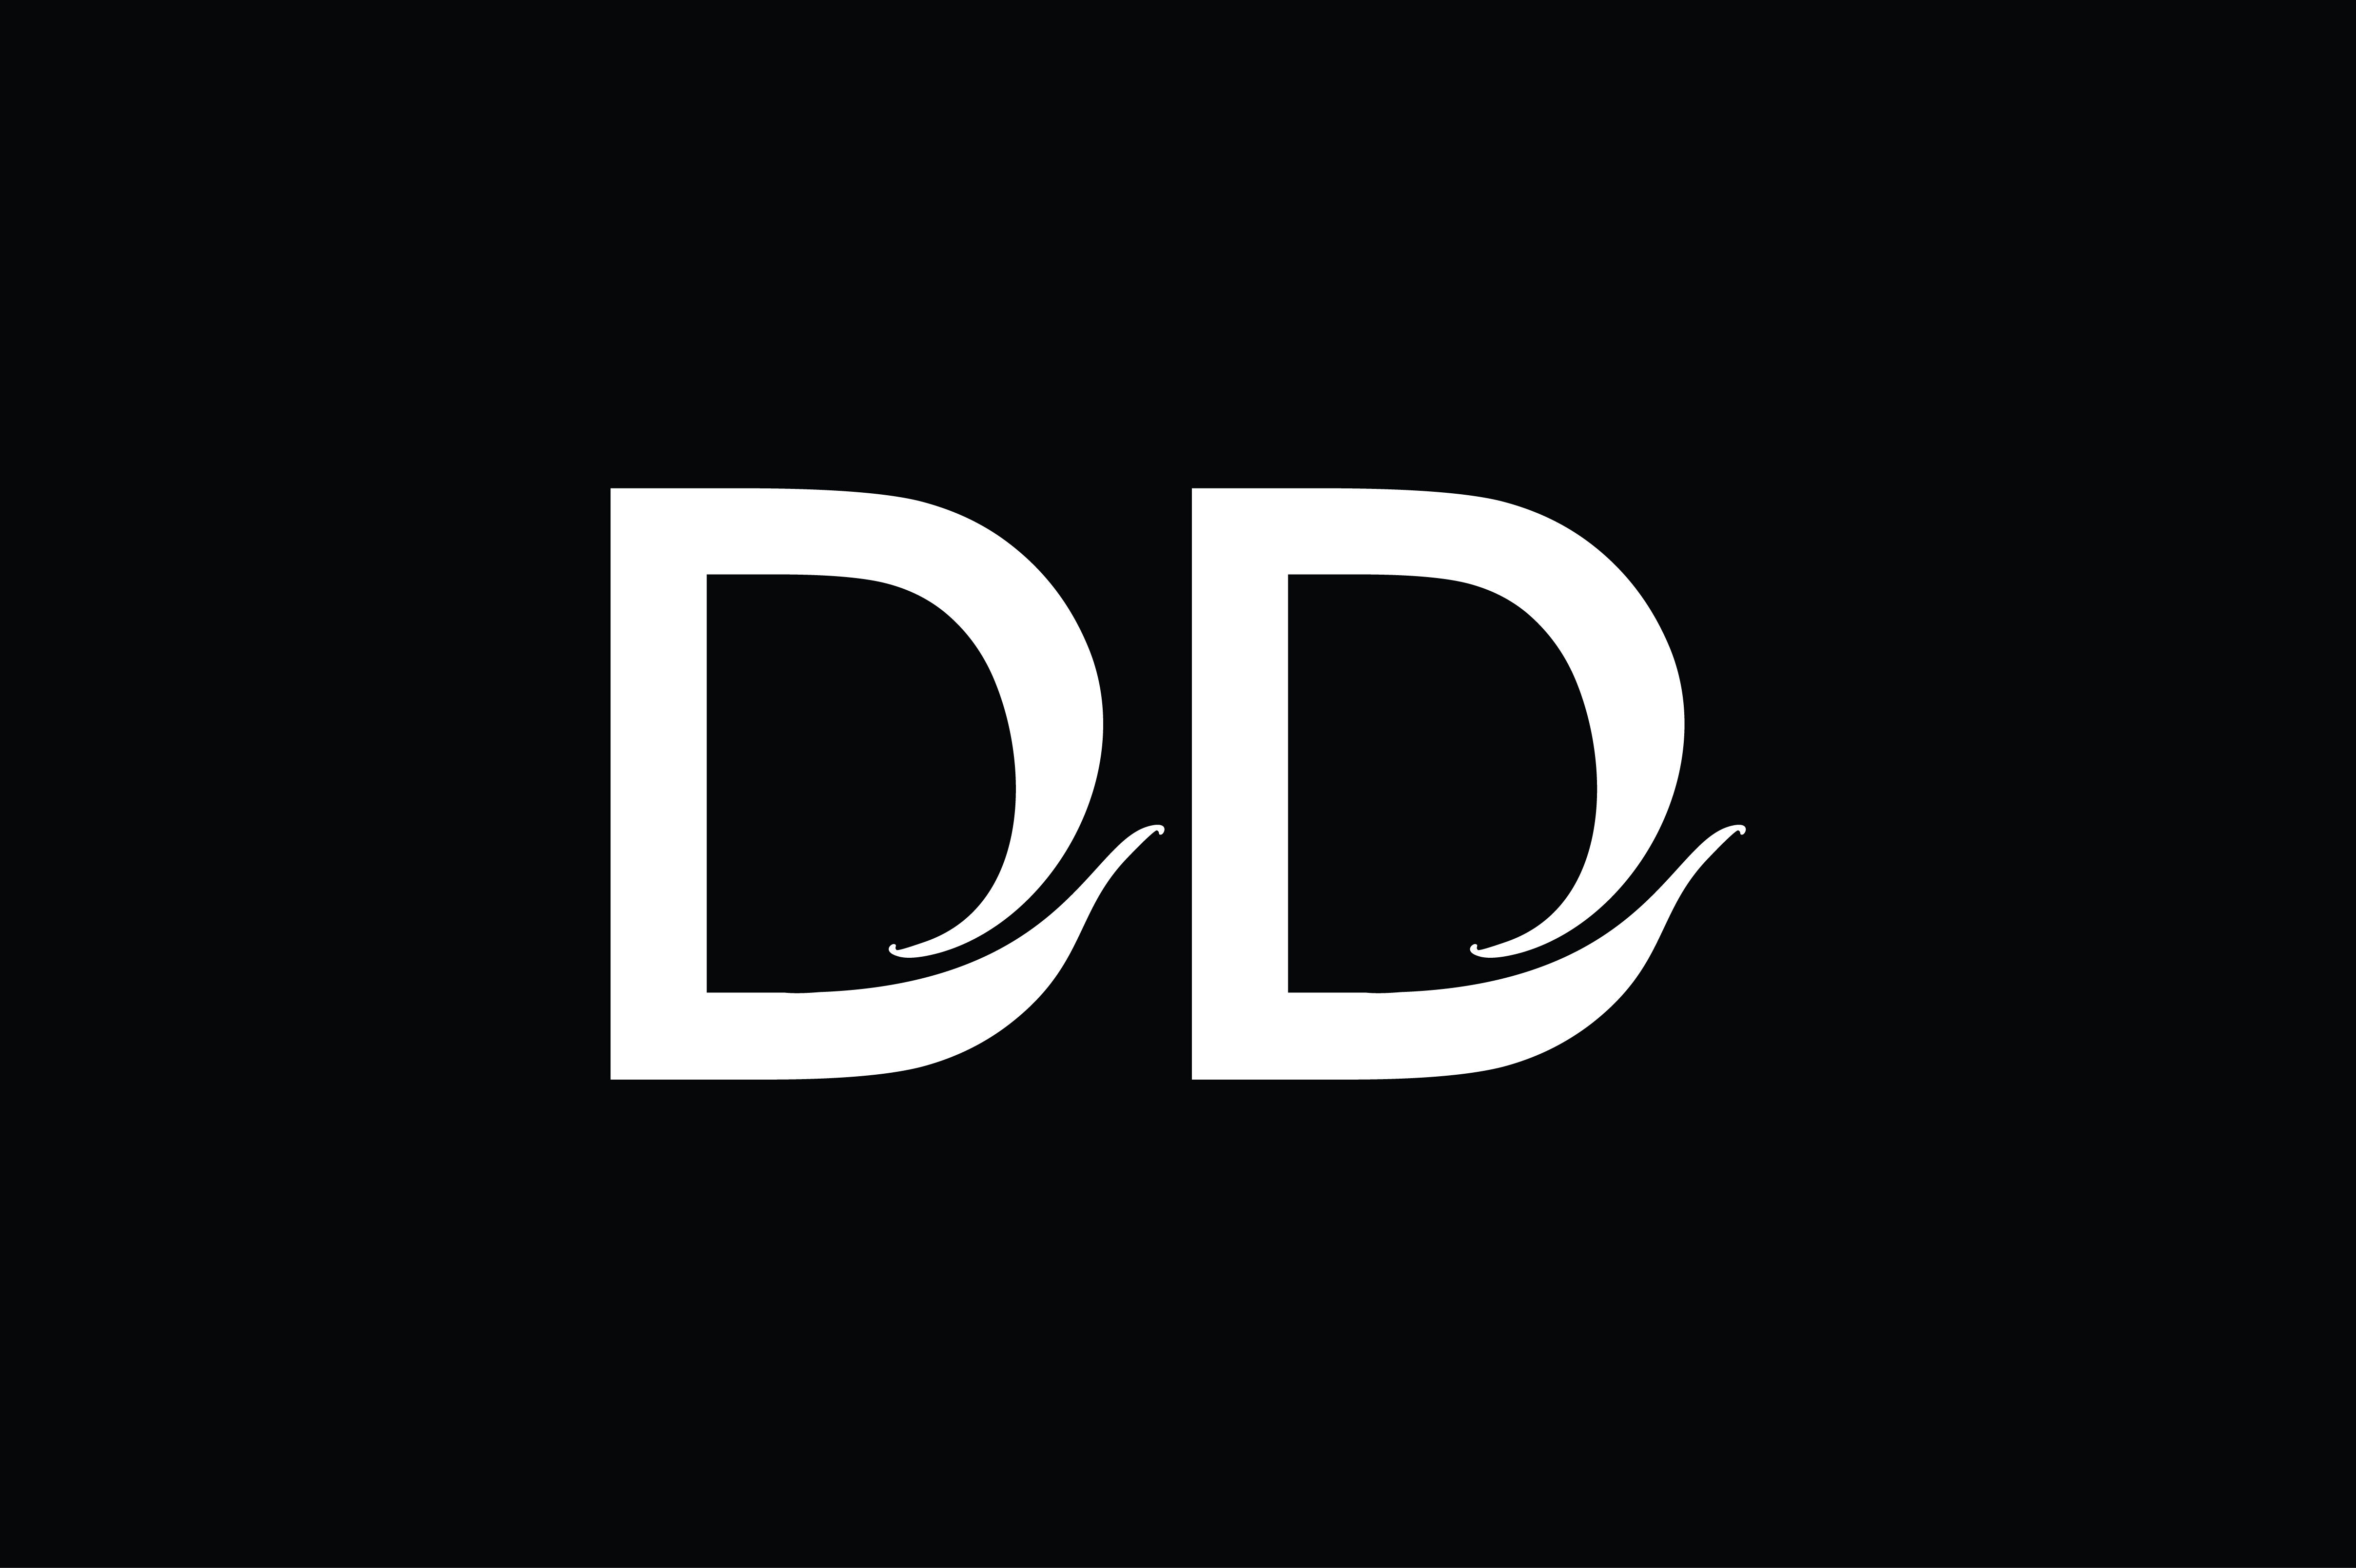 dd-monogram-logo-design-by-vectorseller-thehungryjpeg